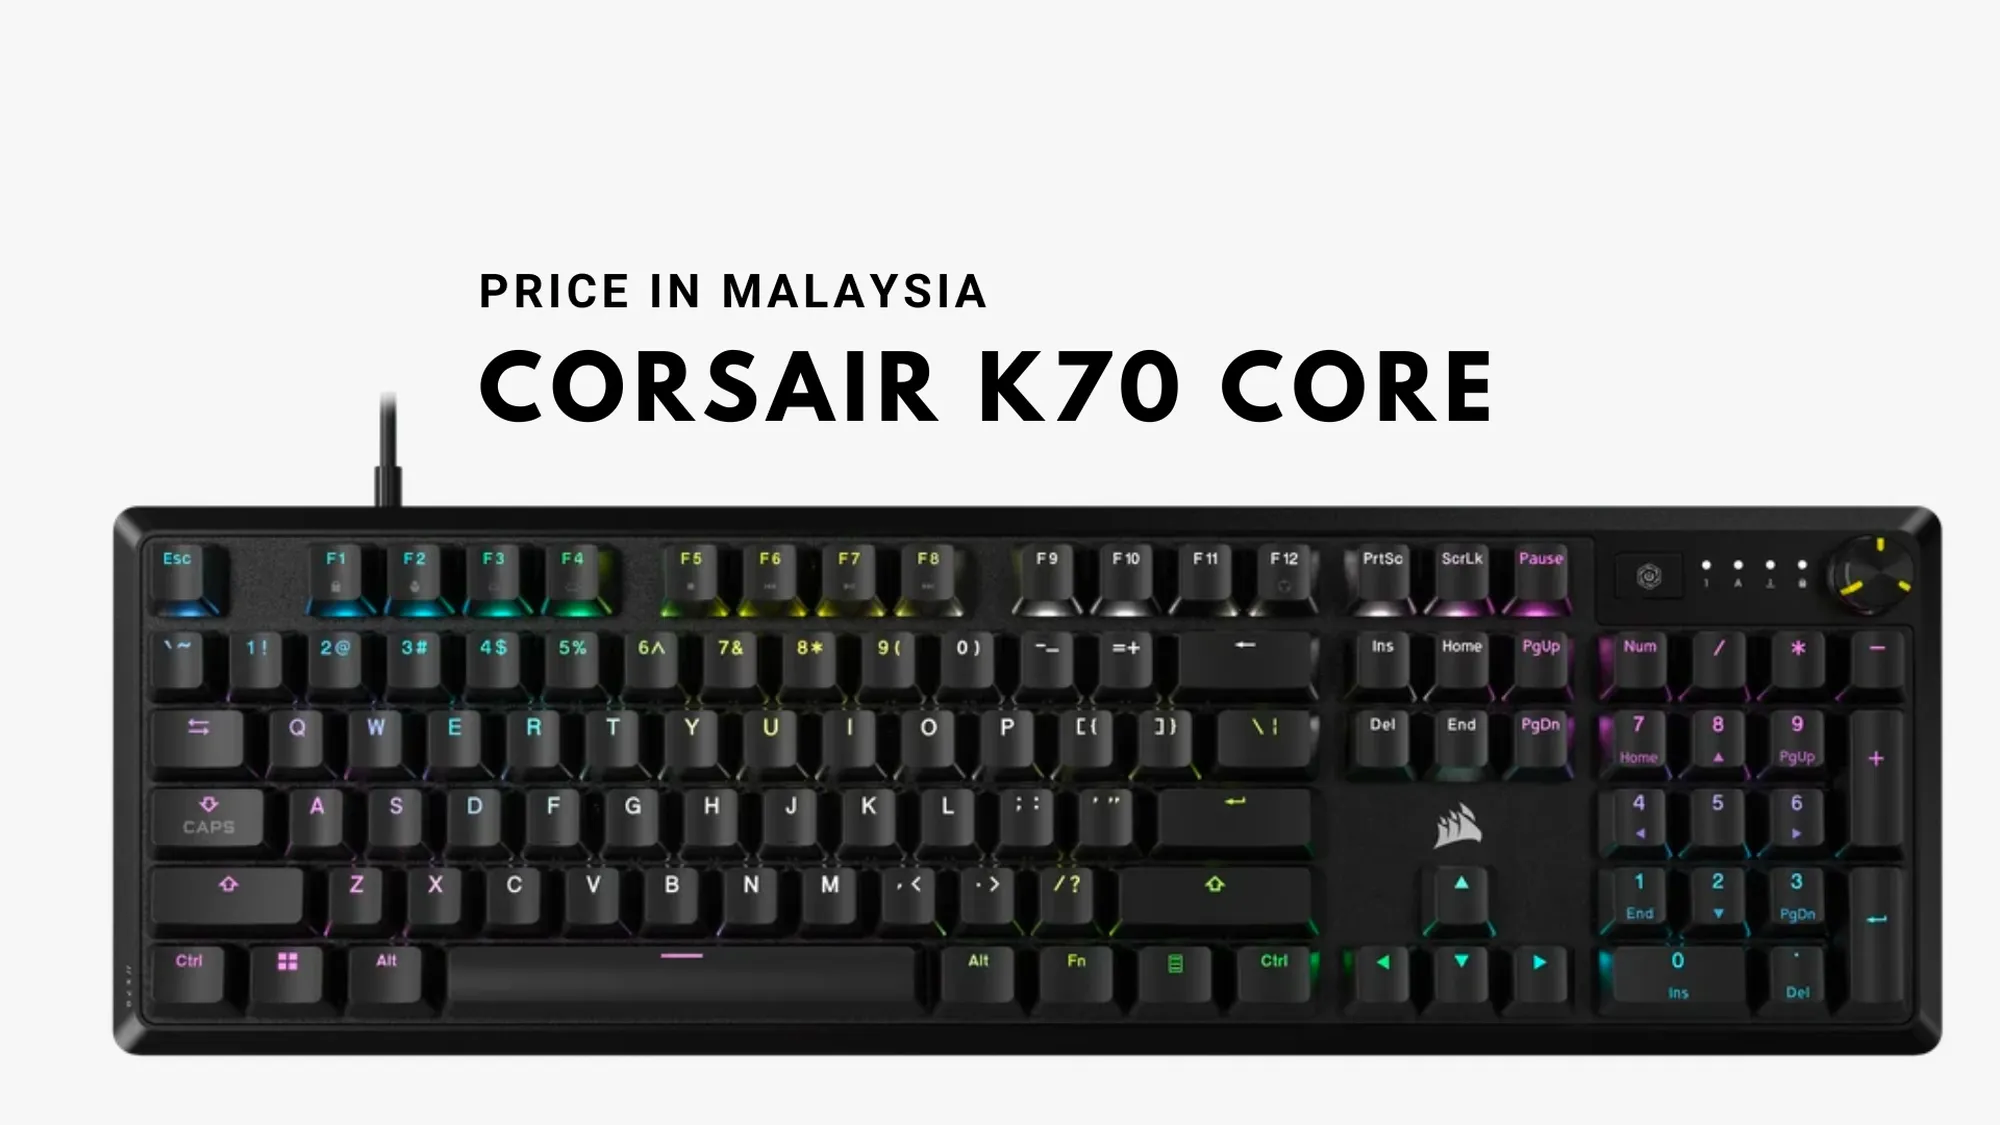 corsair k70 core price list in malaysia